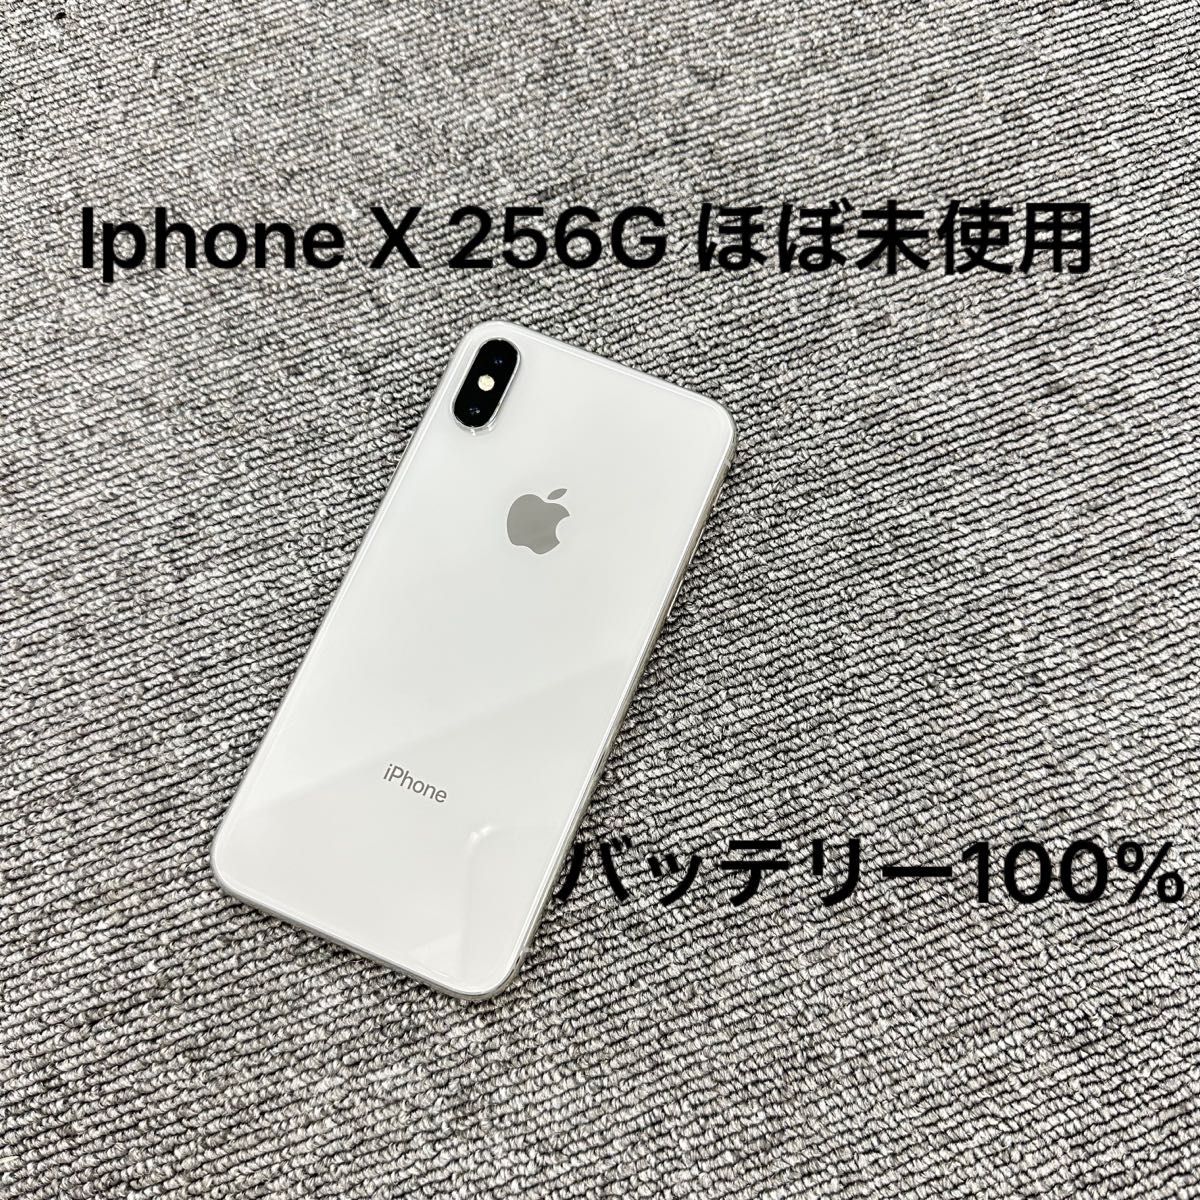 iPhone X Silver 256 GB バッテリー100% ほぼ未使用｜PayPayフリマ